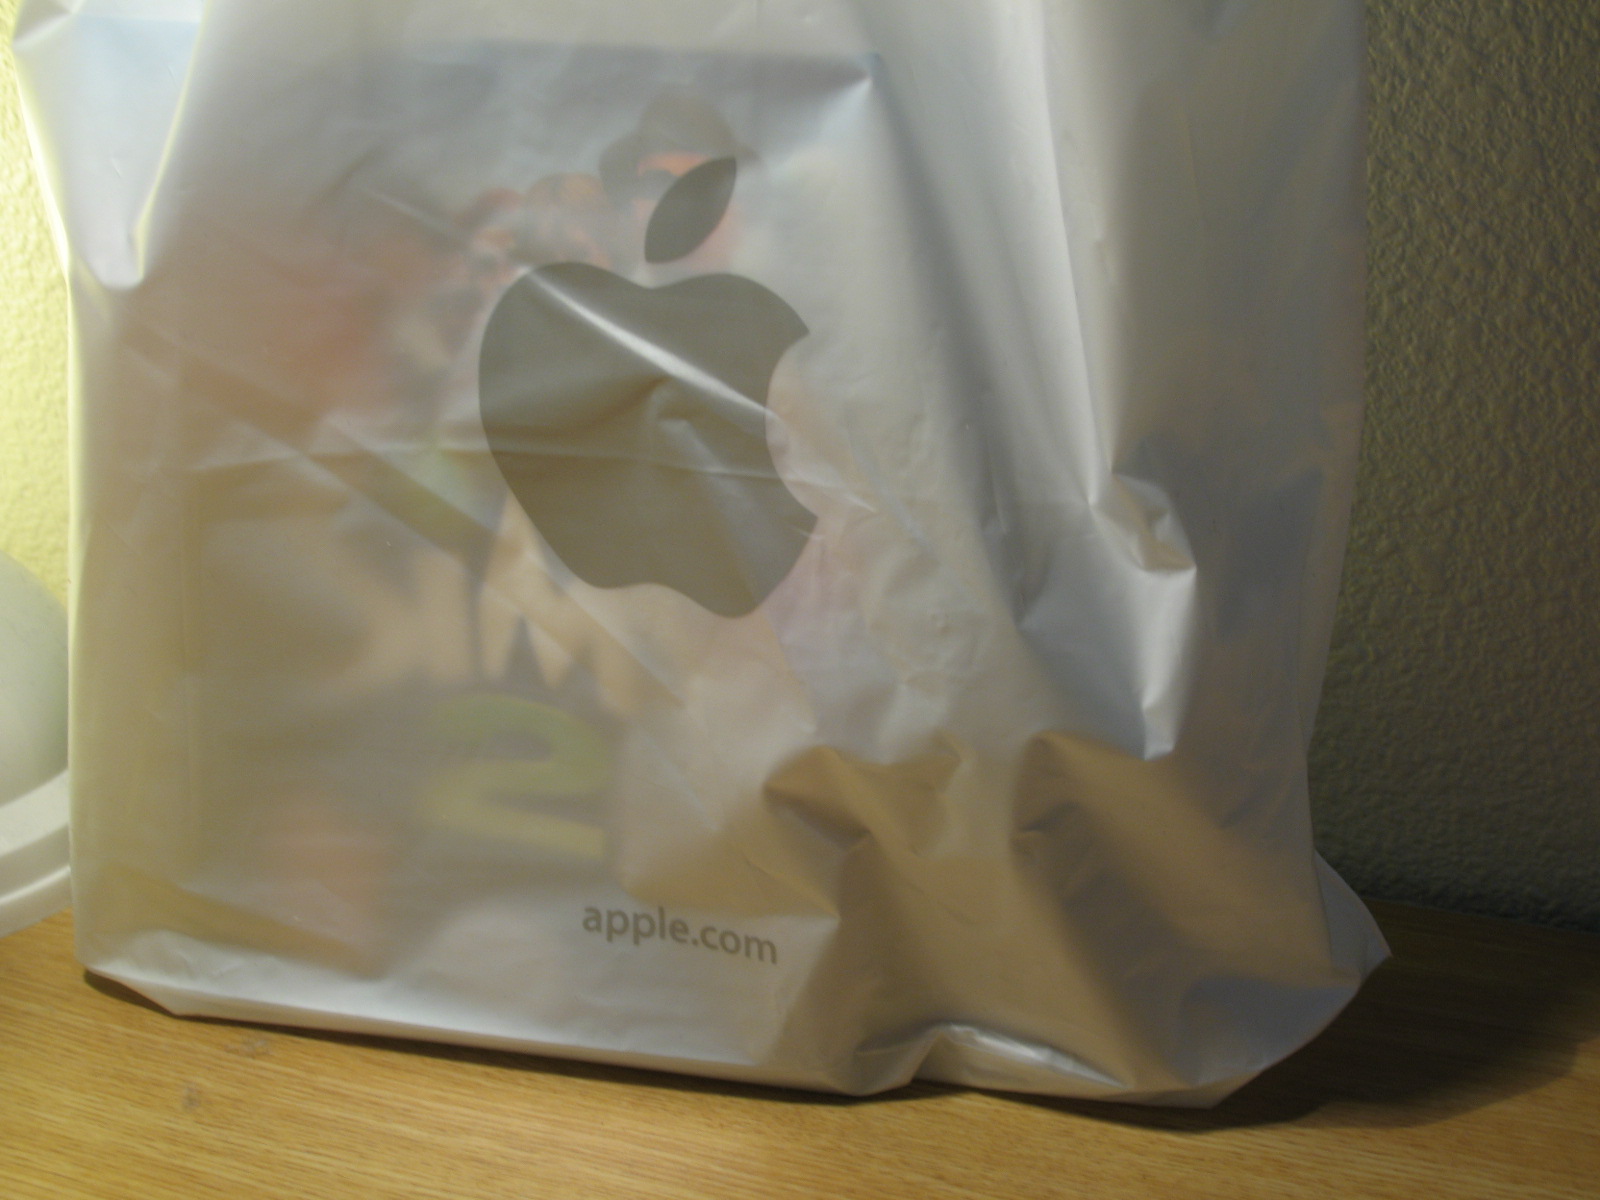 a close up of a bag with an apple logo